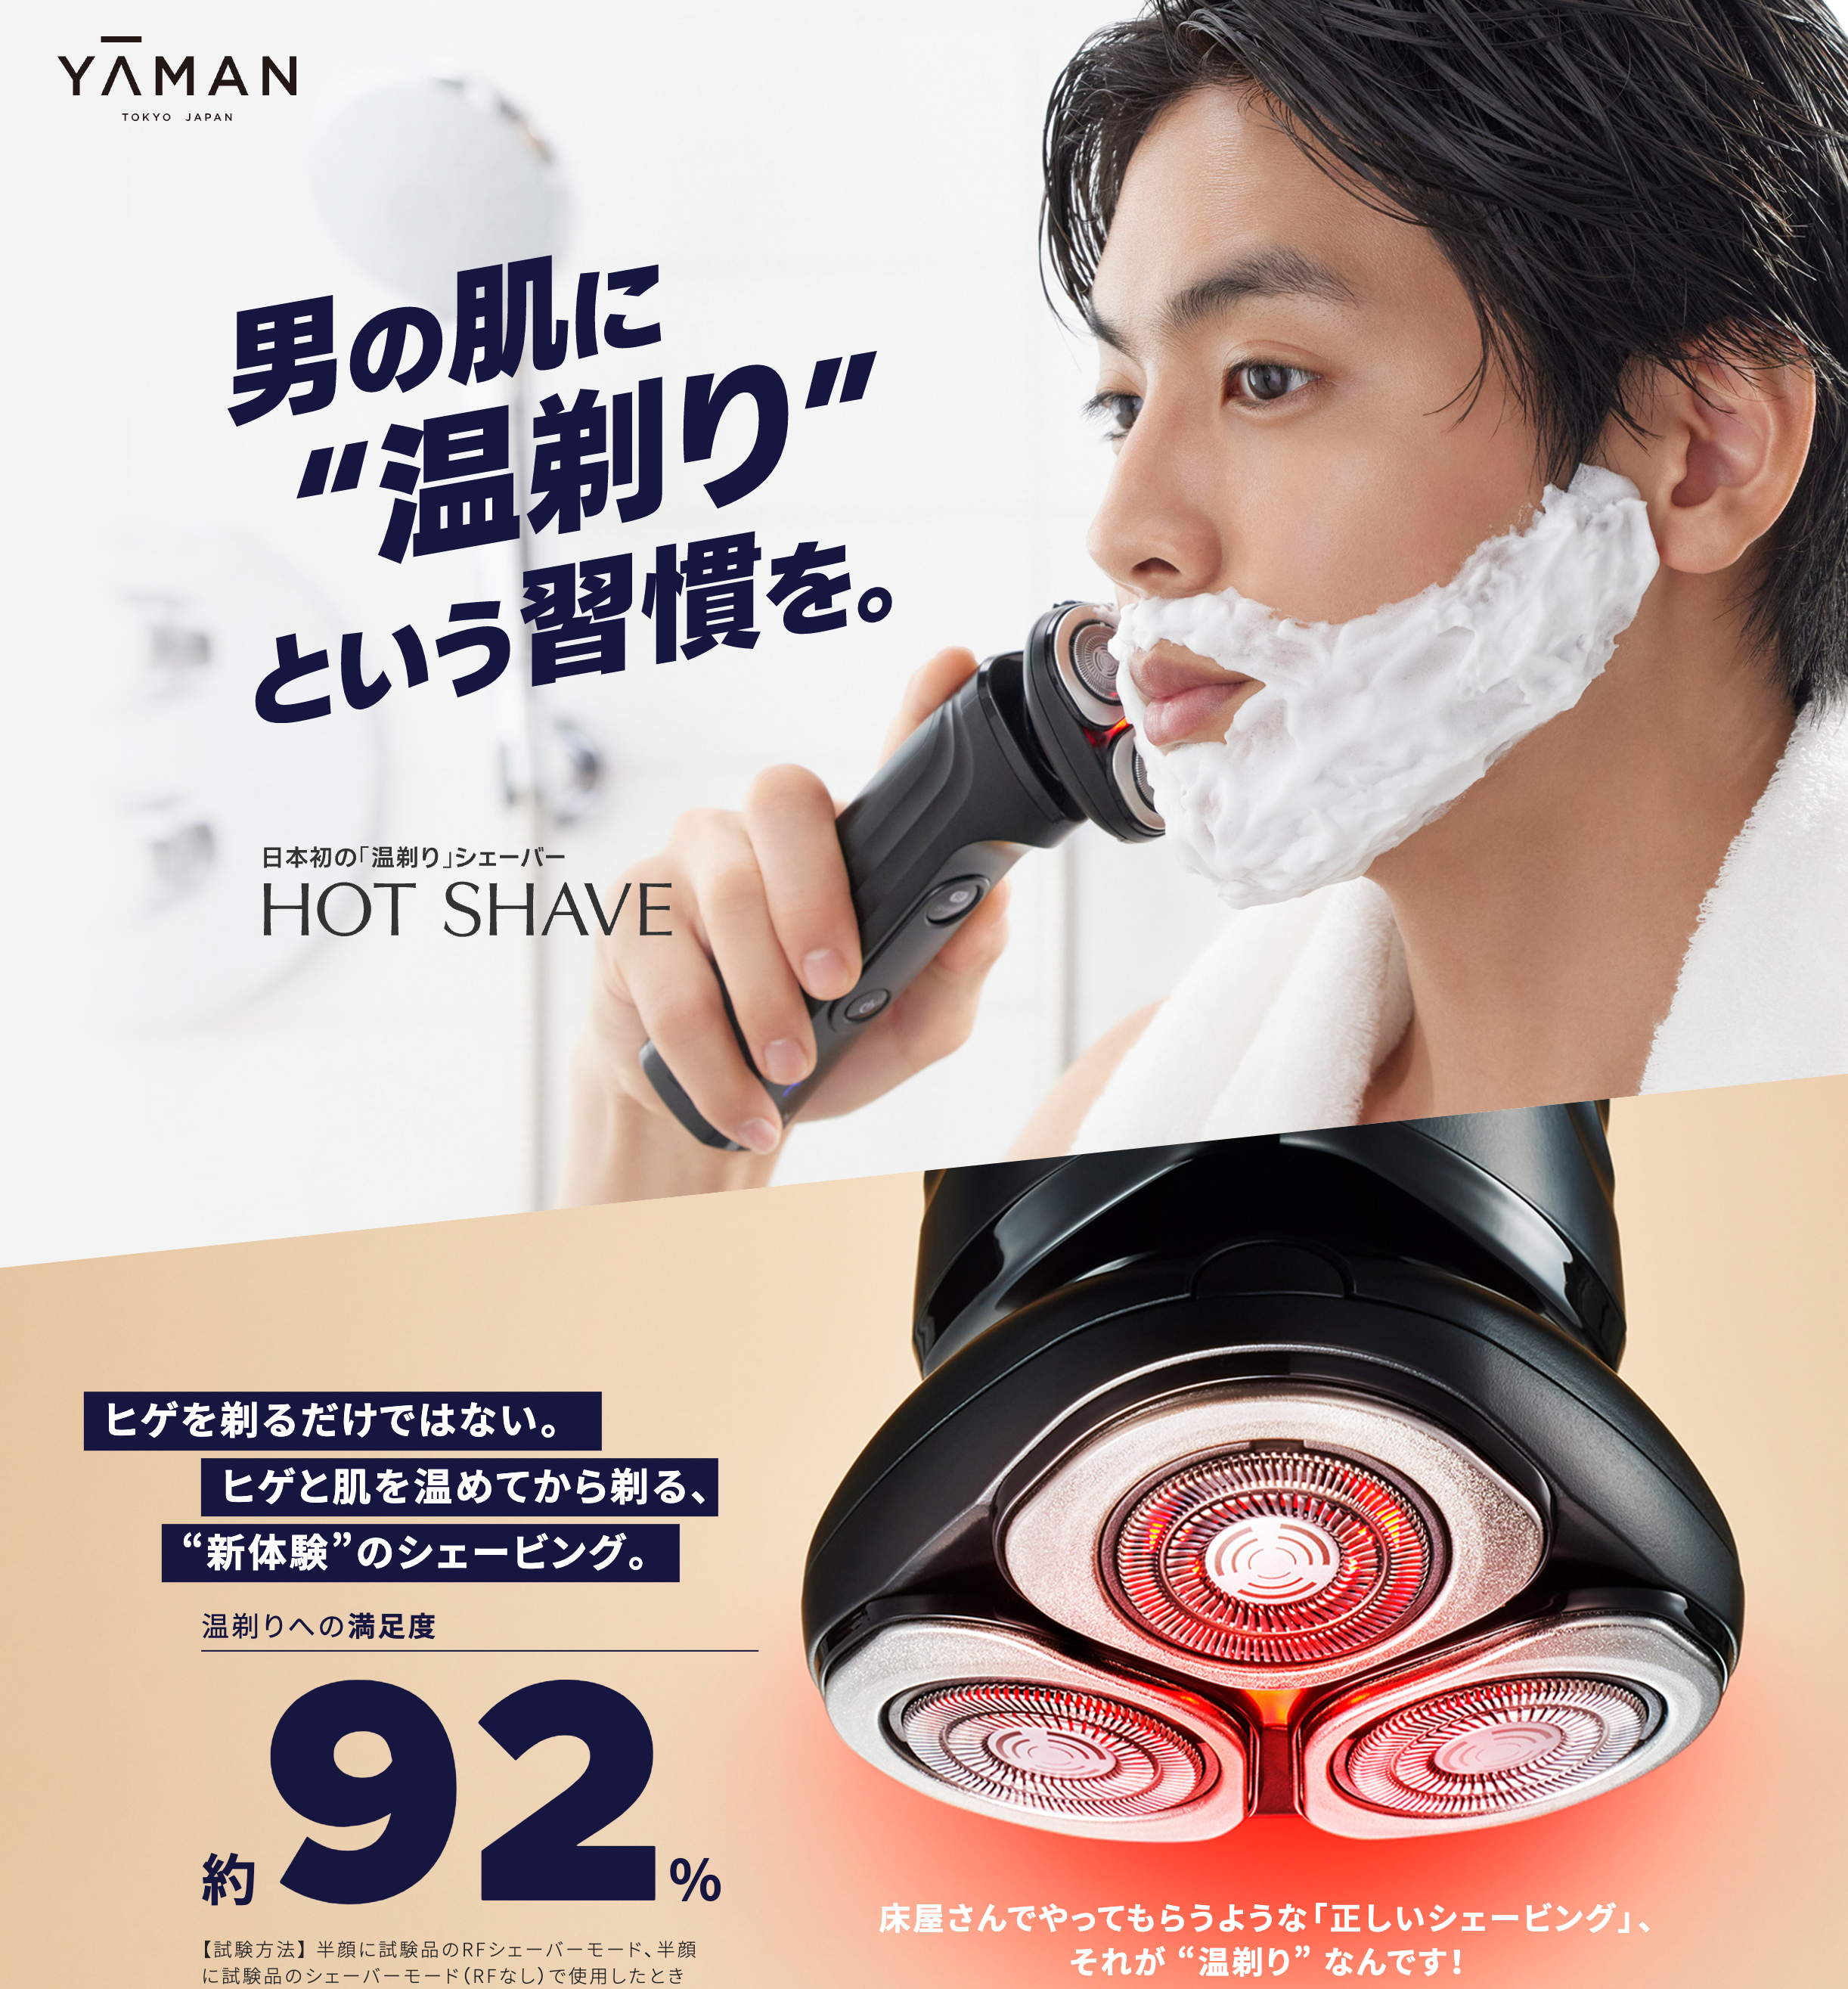 YA-MAN 電動シェーバー HOT SHAVE YJEC0 - メンズシェーバー